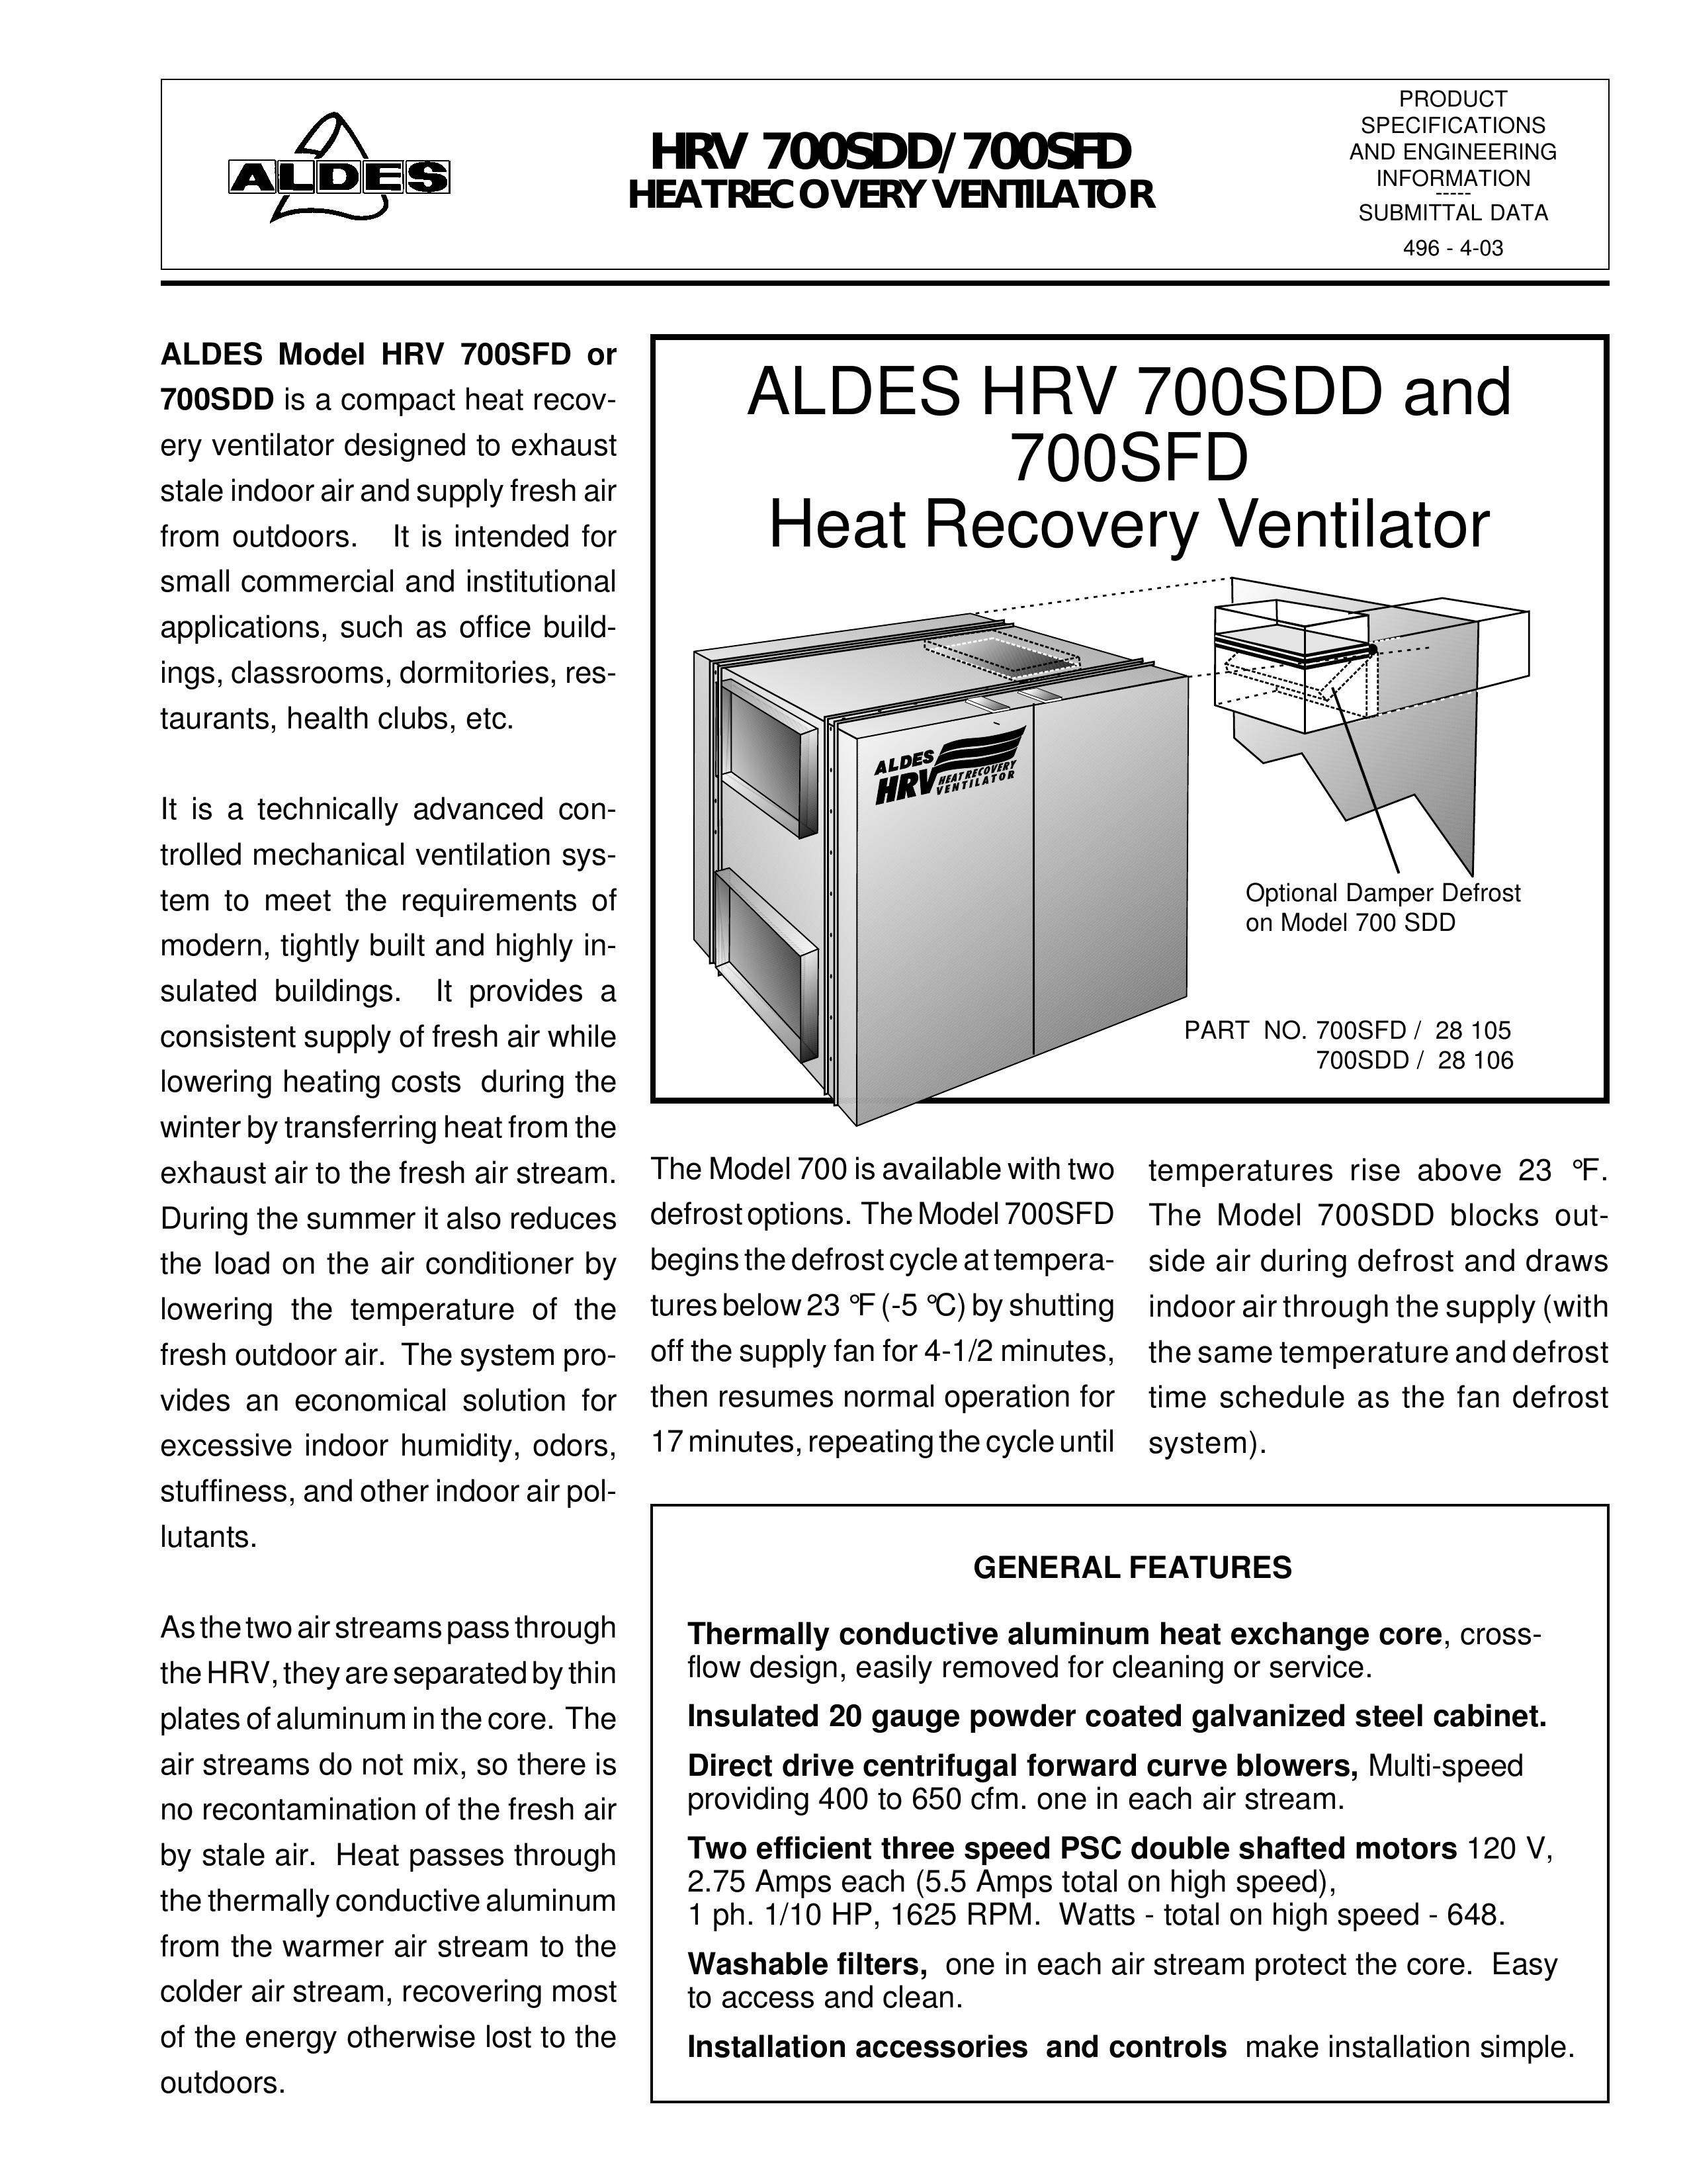 American Aldes HRV 700SDD Ventilation Hood User Manual